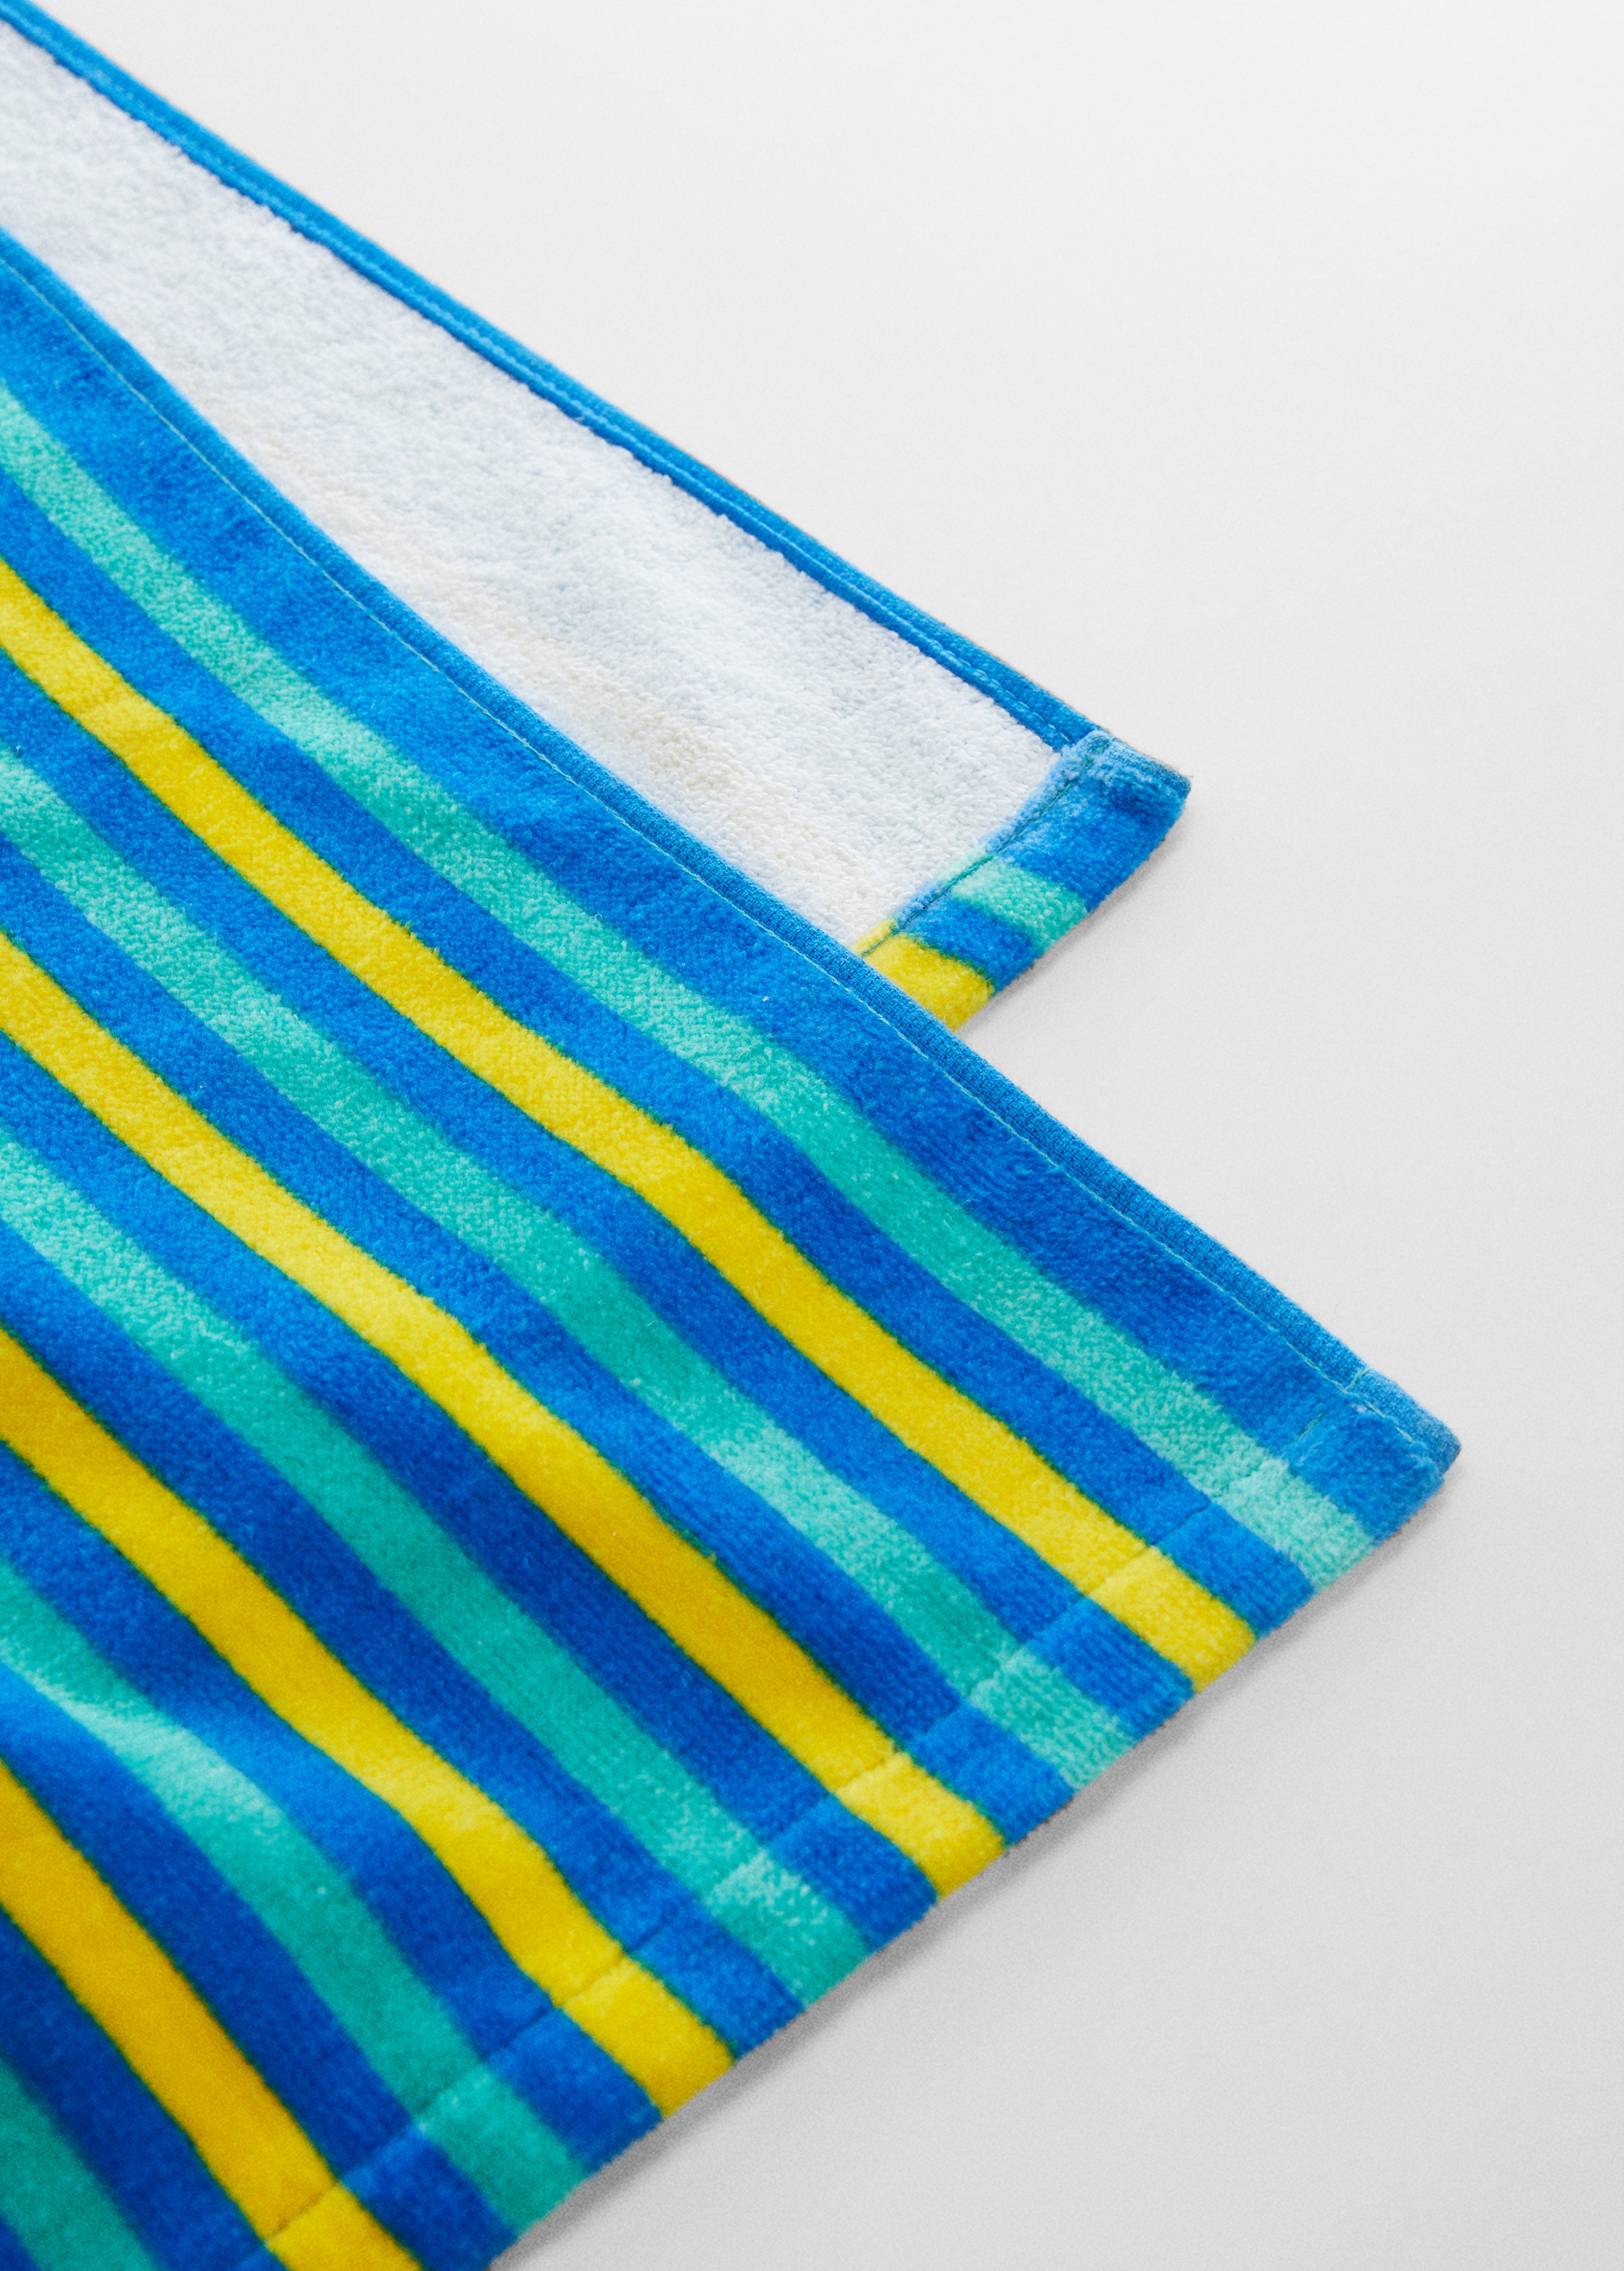 Multi-coloured striped beach towel - Medium plane